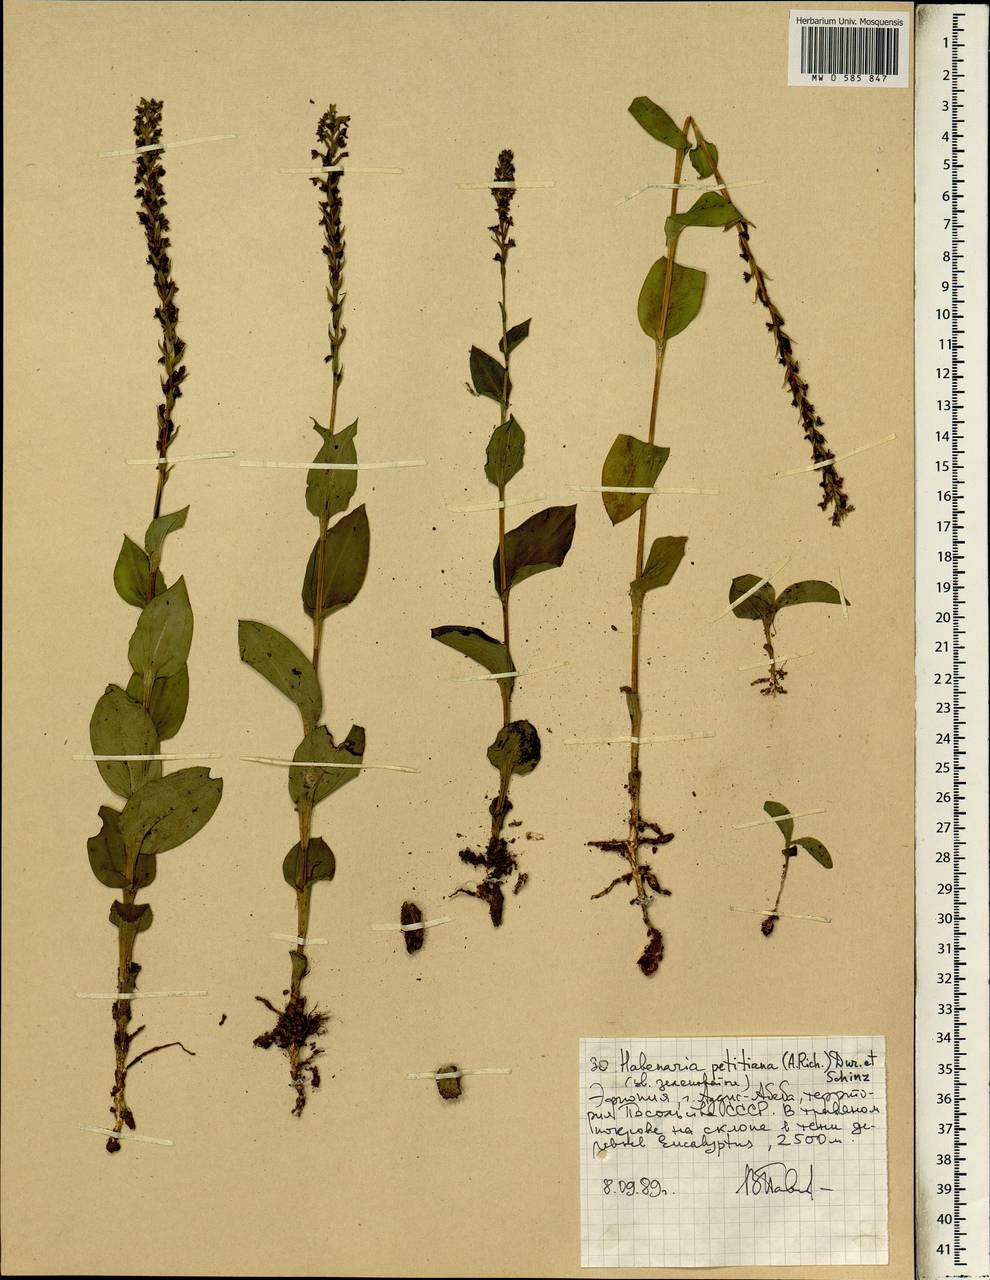 Habenaria petitiana (A.Rich.) T.Durand & Schinz, Африка (AFR) (Эфиопия)